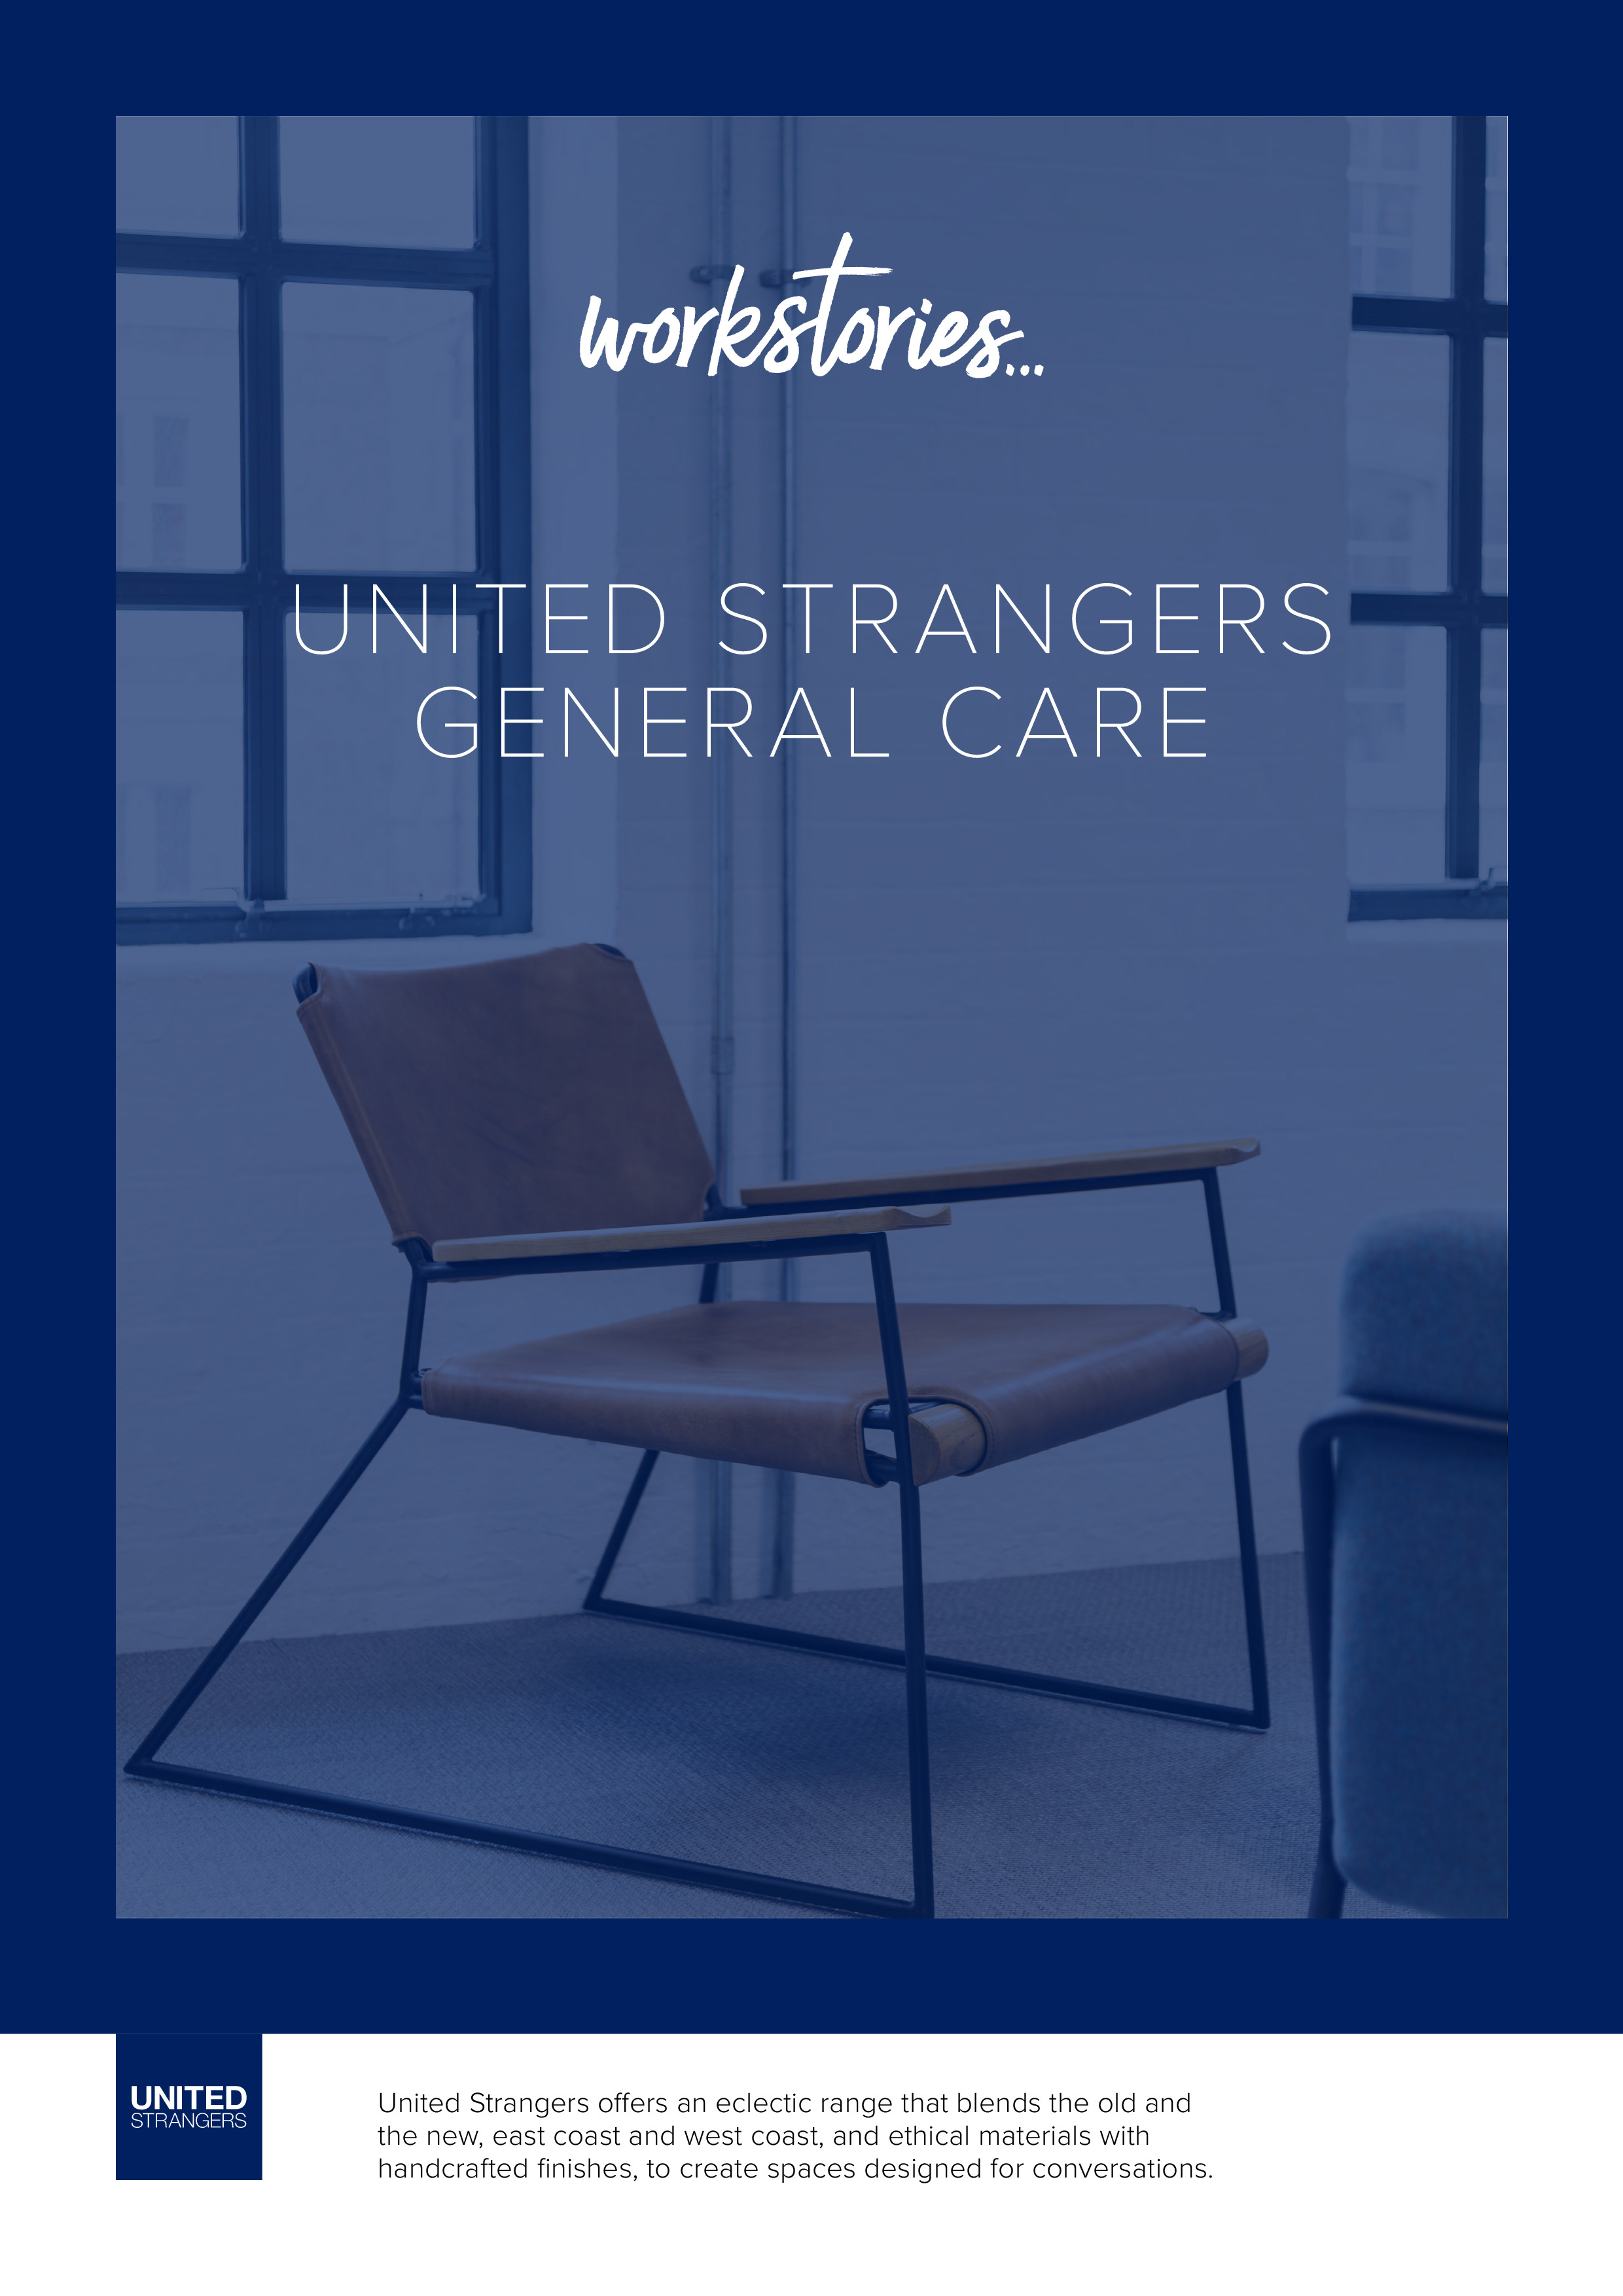 Workstories - General Care - United Strangers